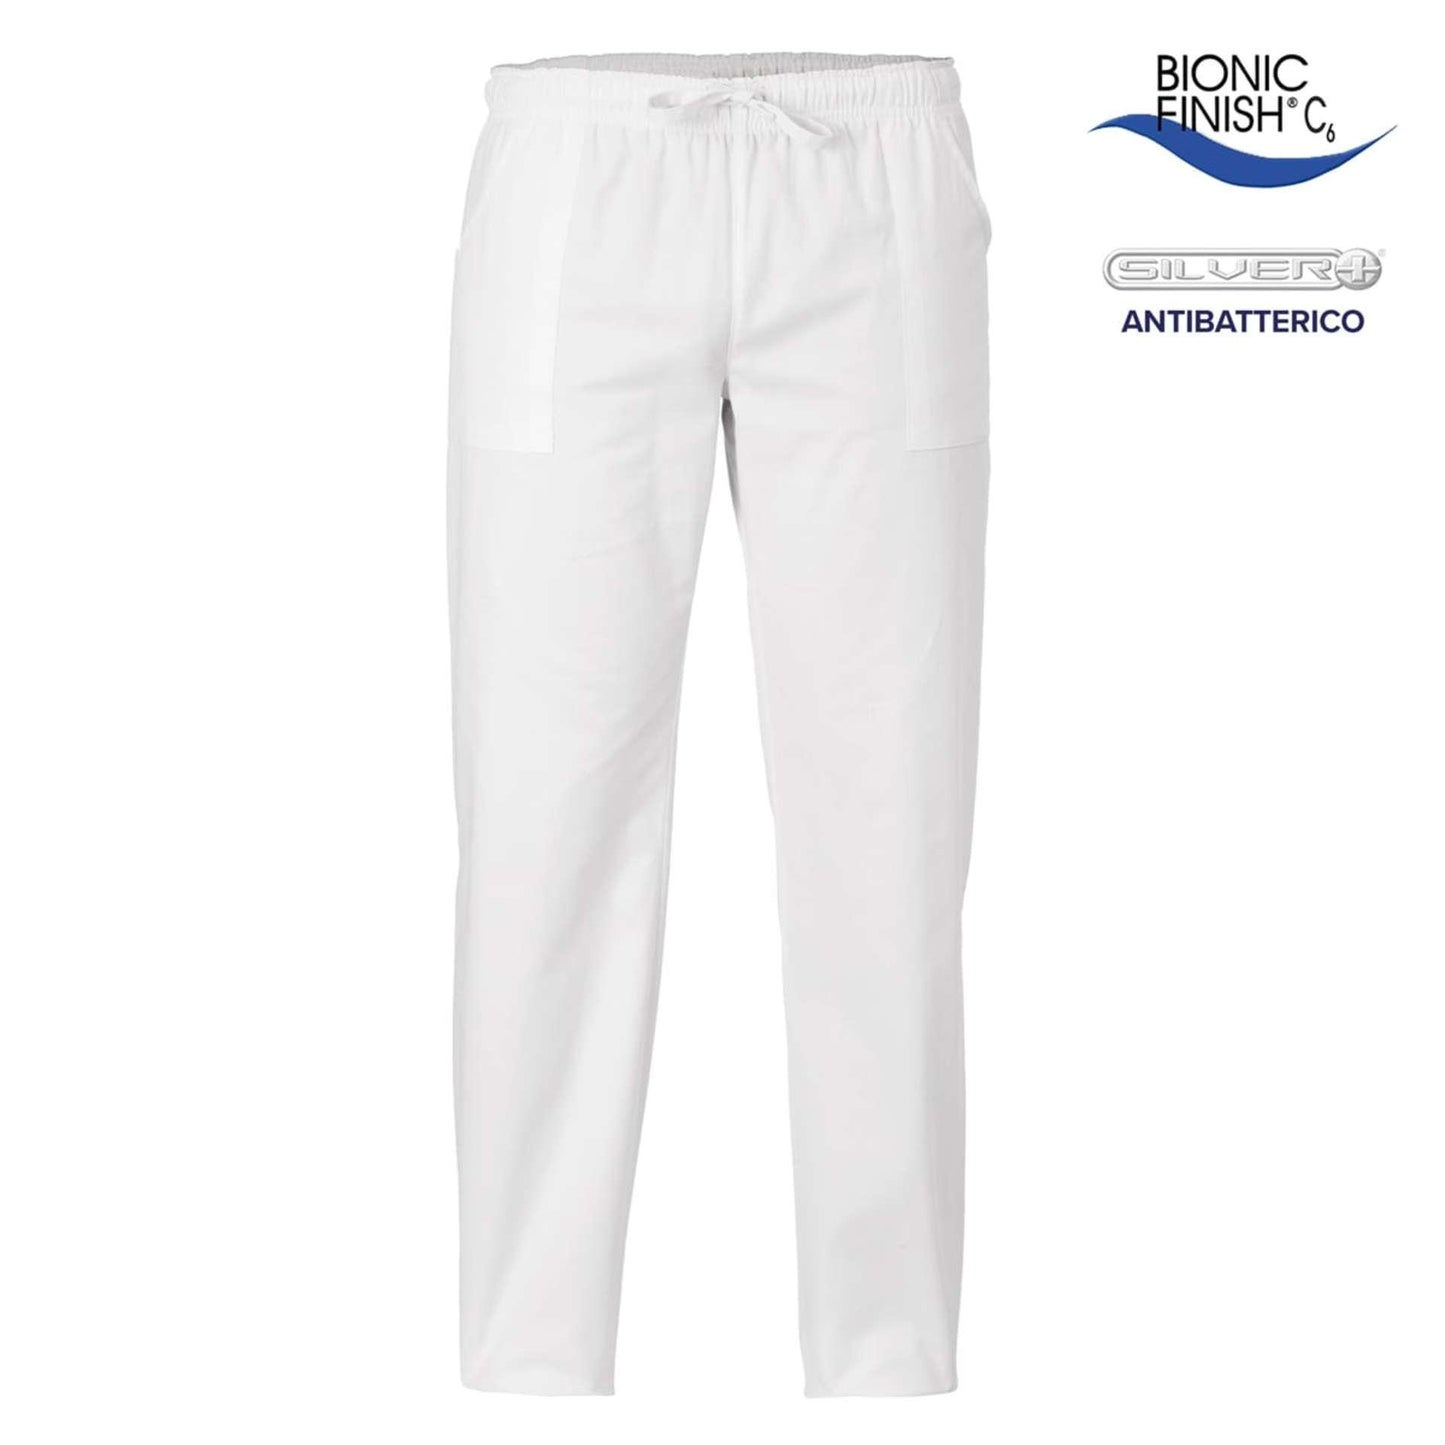 Pantalone Tessuto Antibatterico Bianco No Stiro Pantalone Leggero Medicale